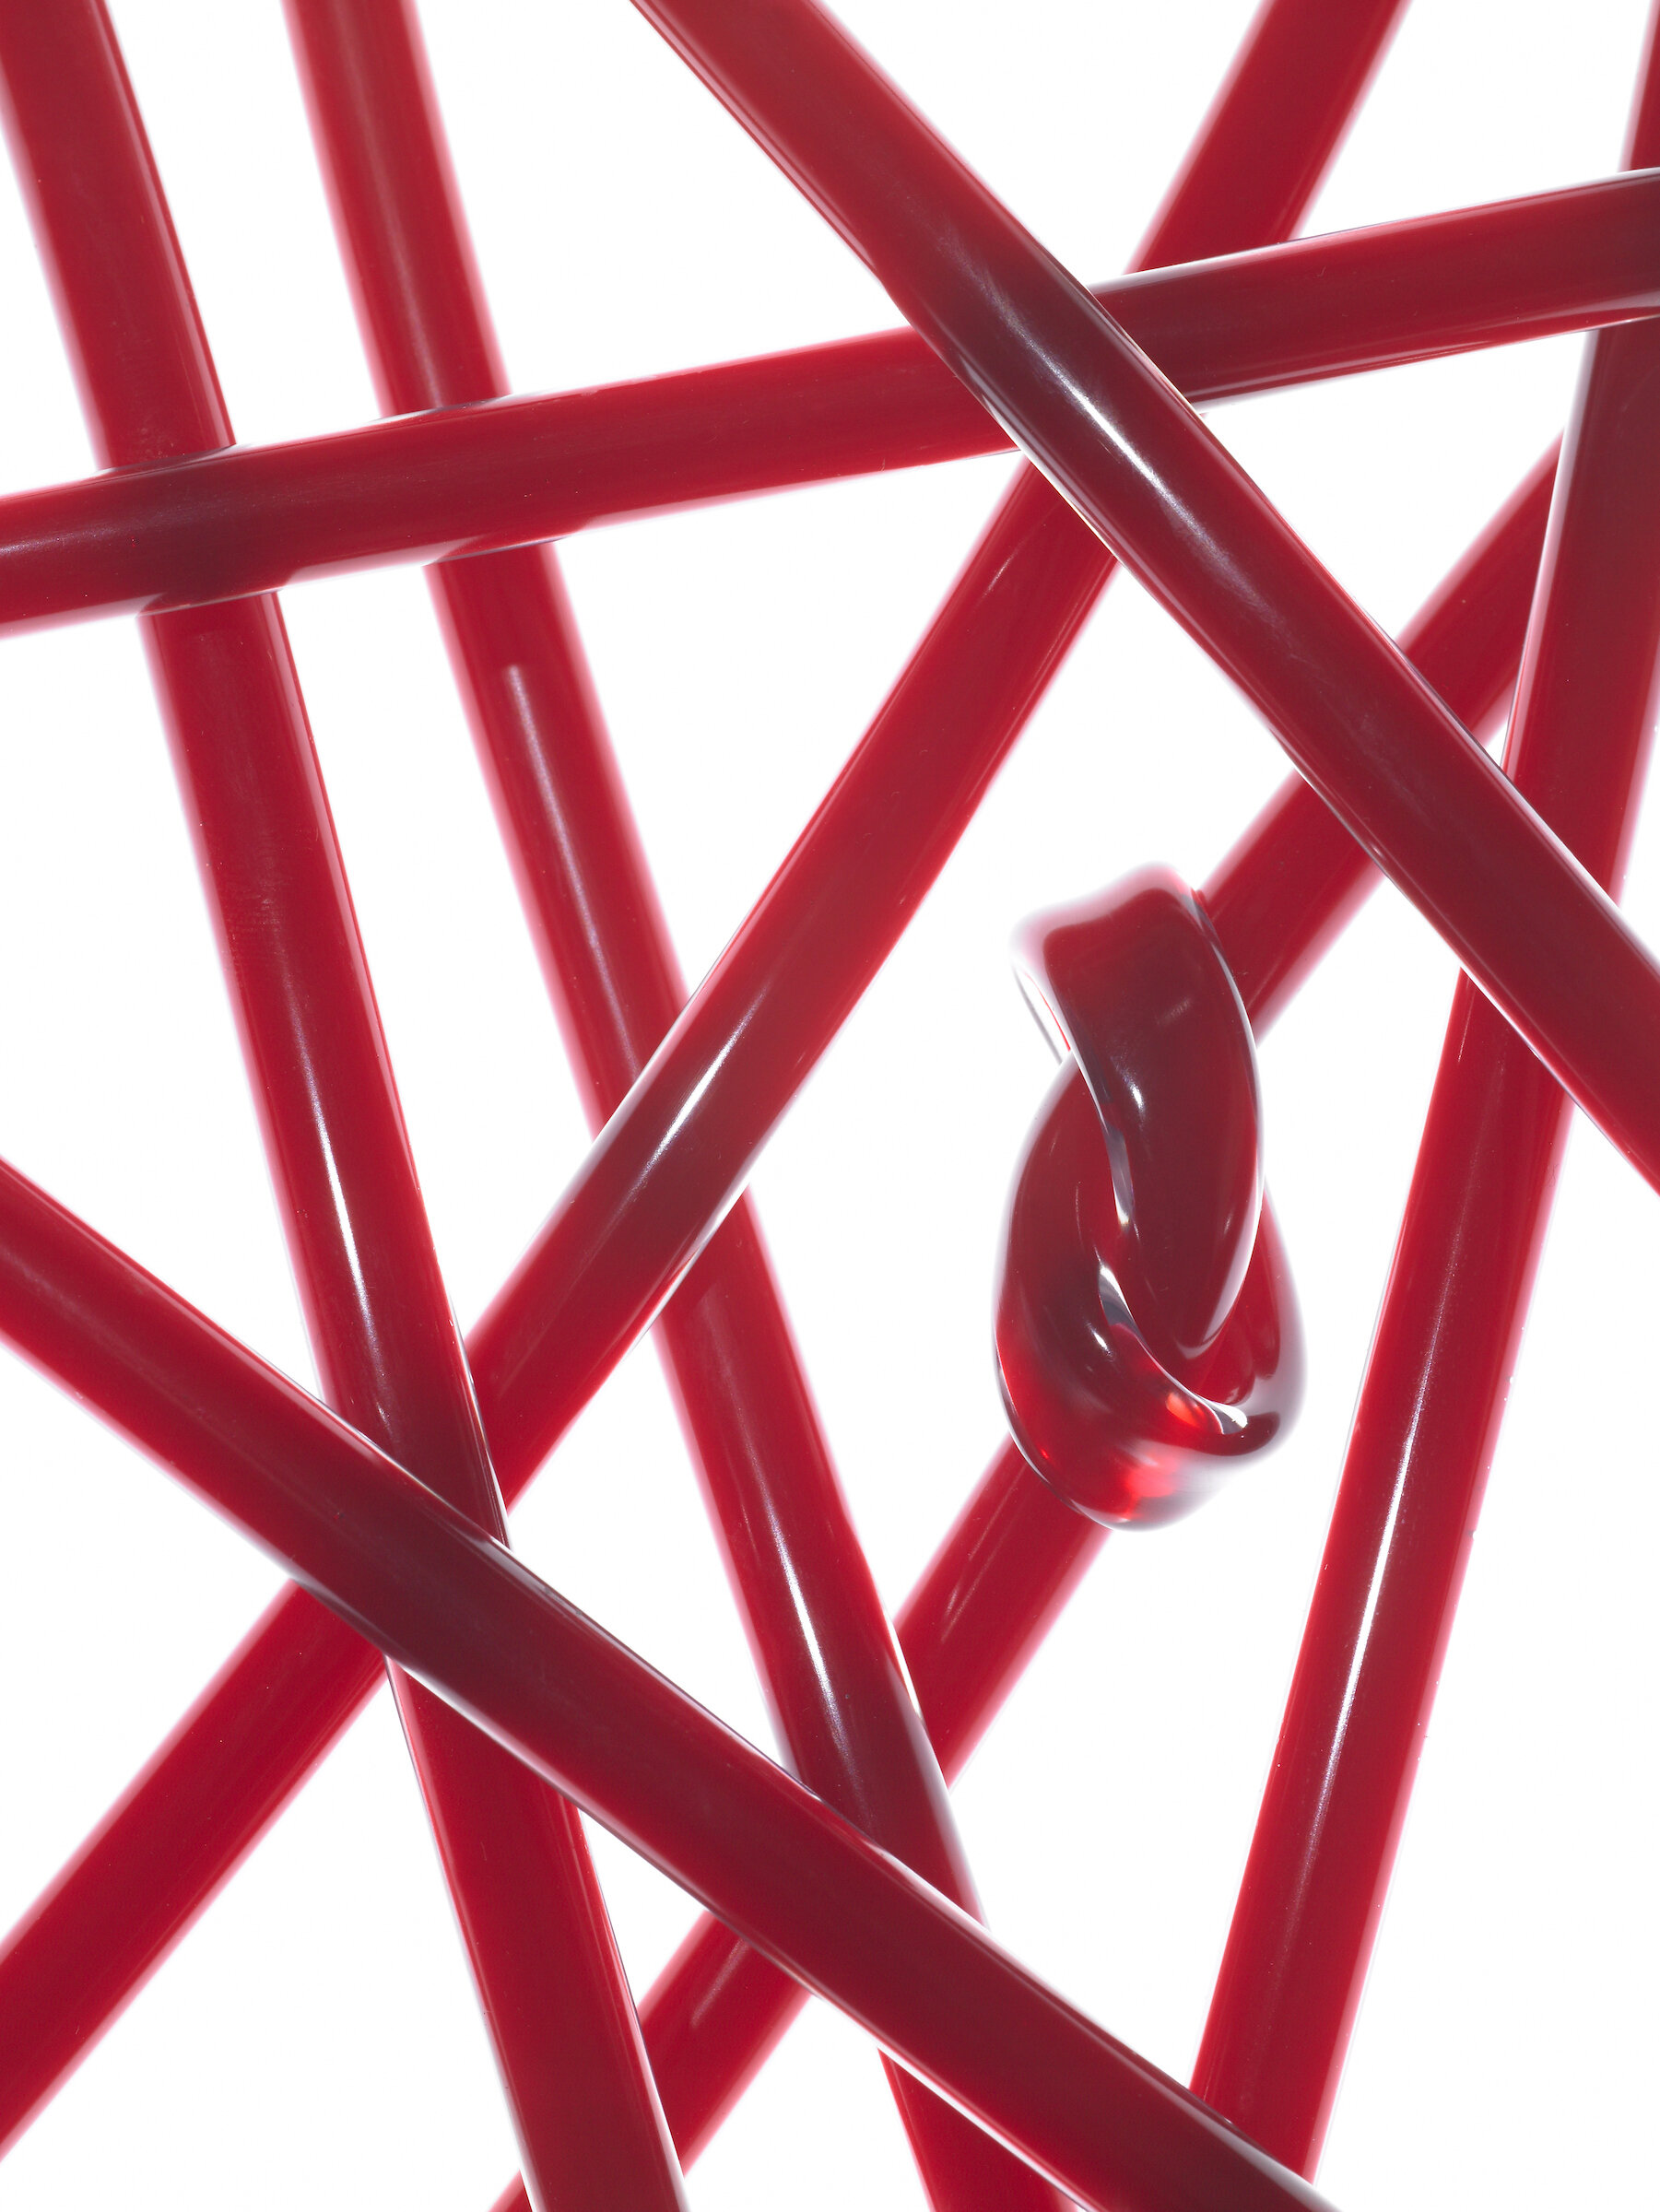 Red knot blood vessels.jpg